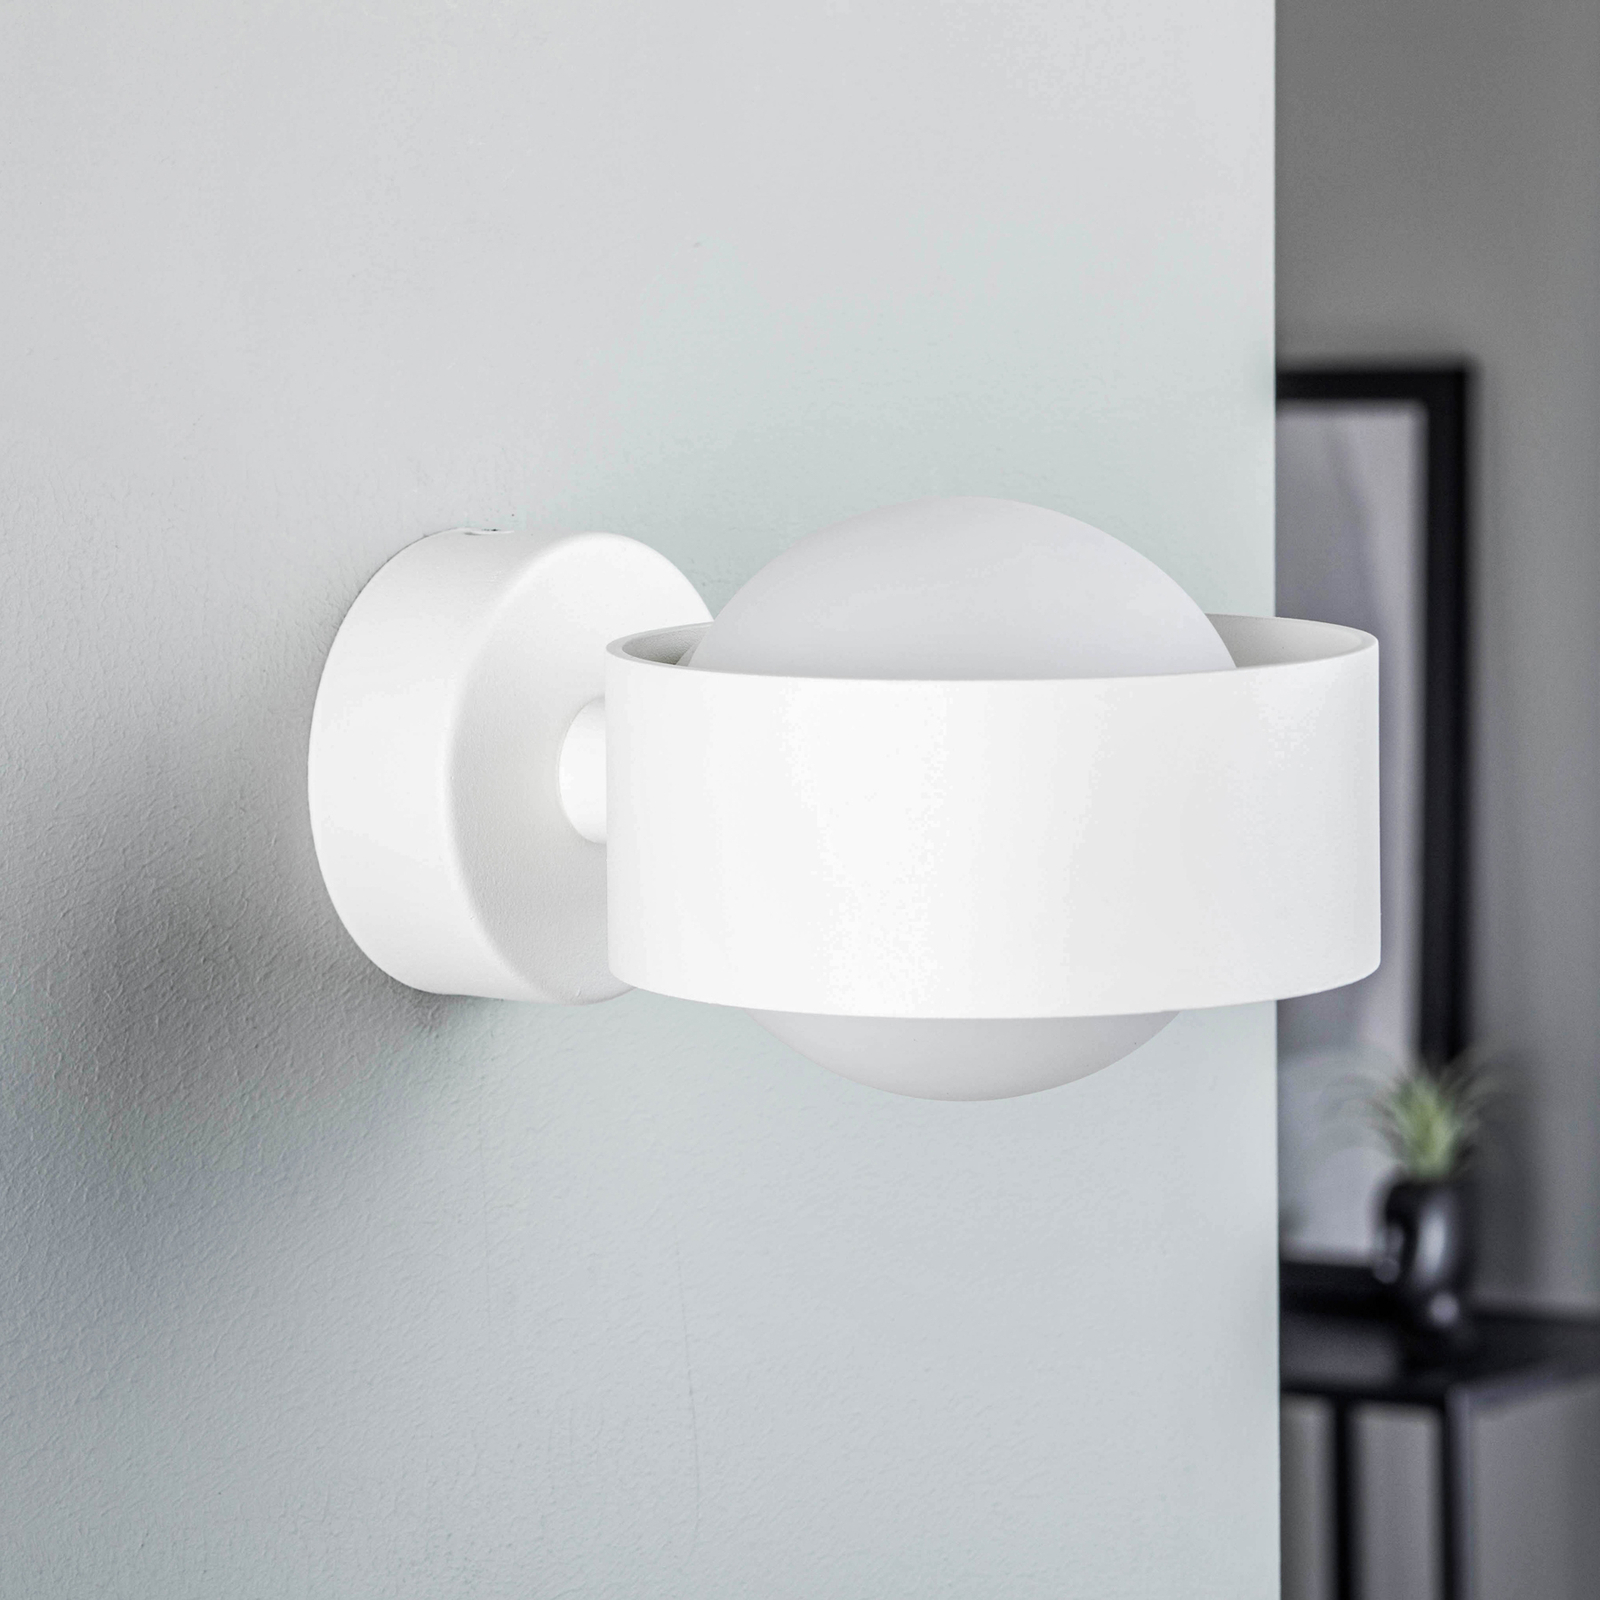 Mado wall light, steel, white, one-bulb